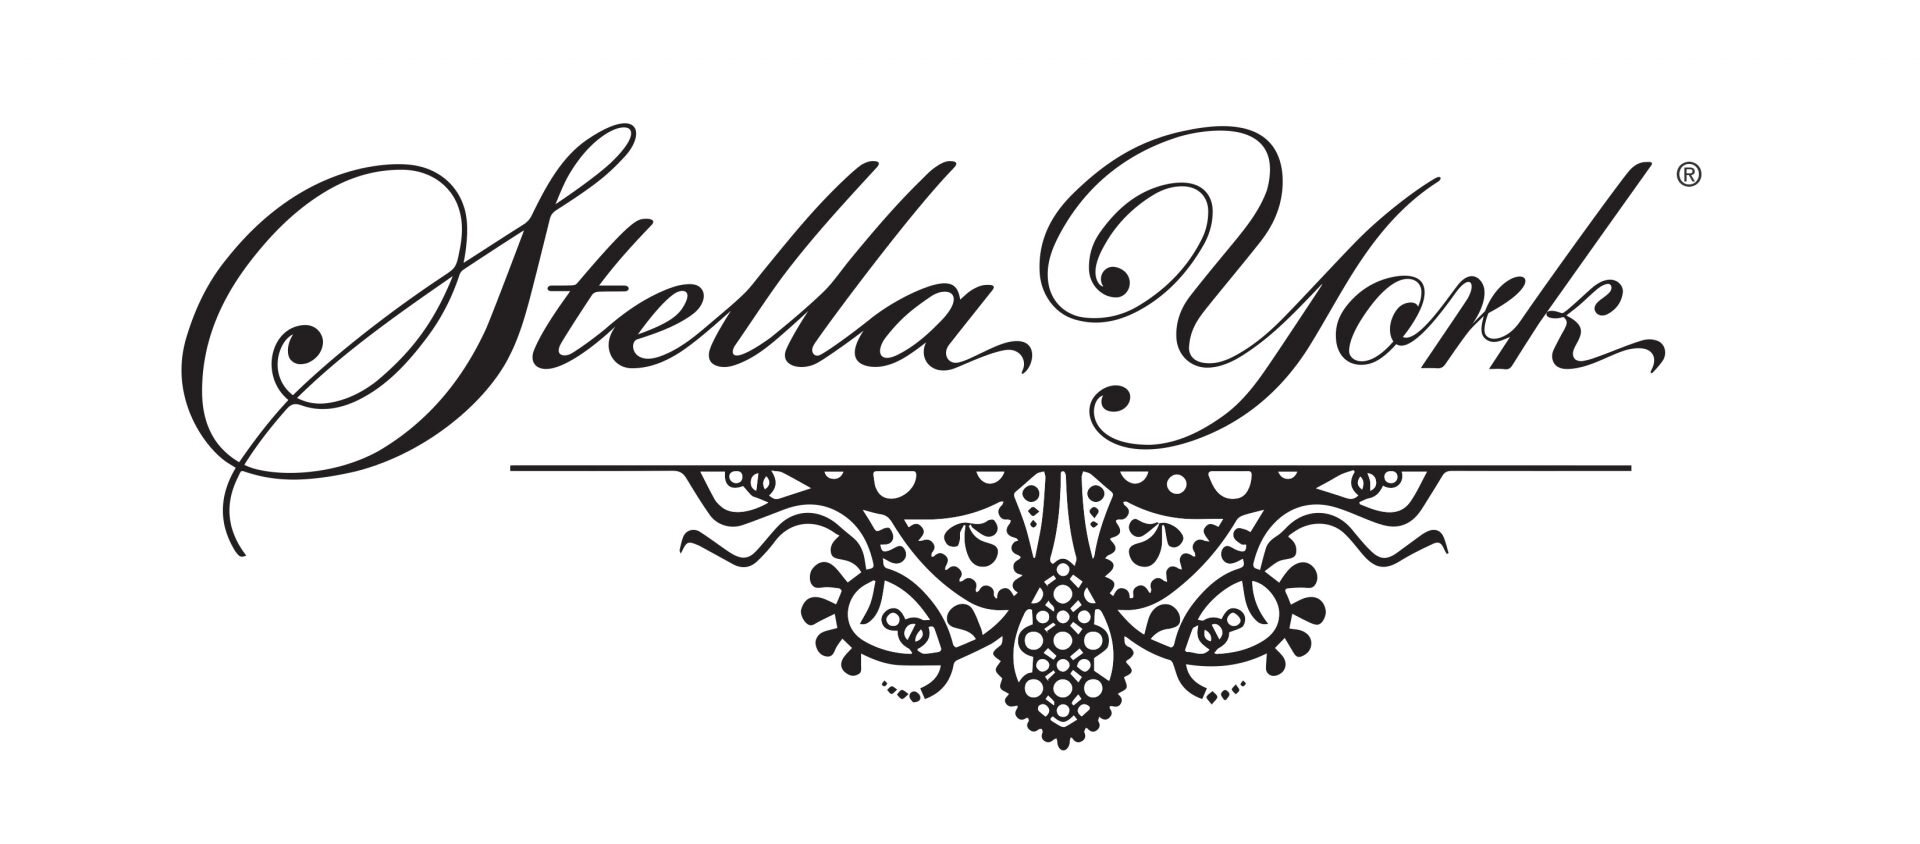 Stella-York-Black-1920x844.jpg